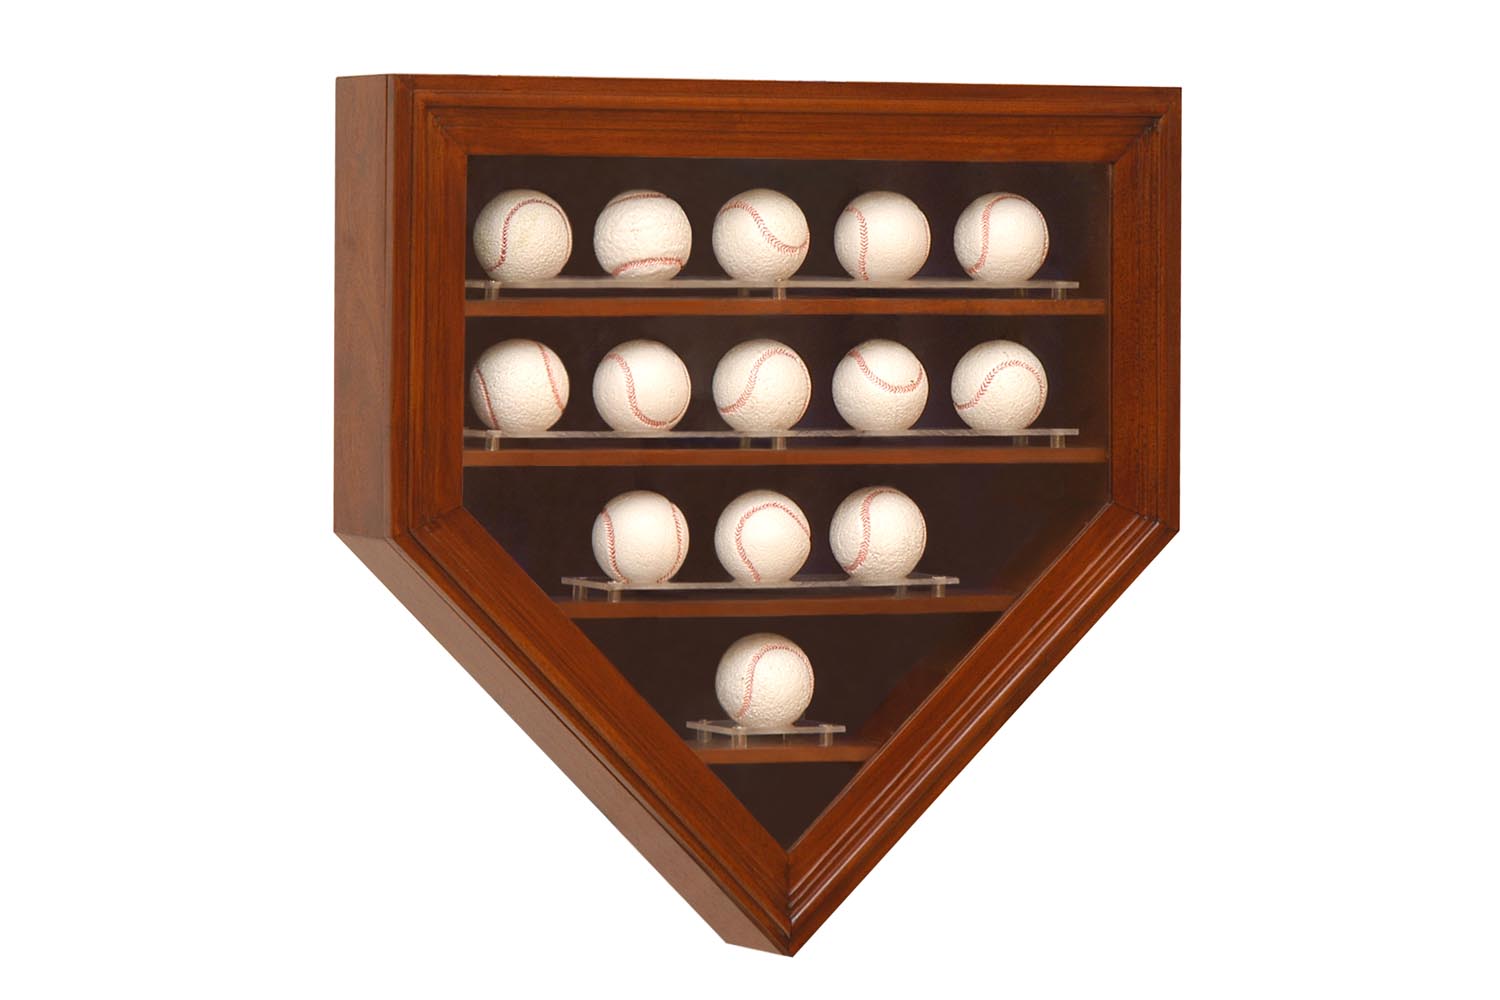 Wood Work Baseball Display Case Plans PDF Plans